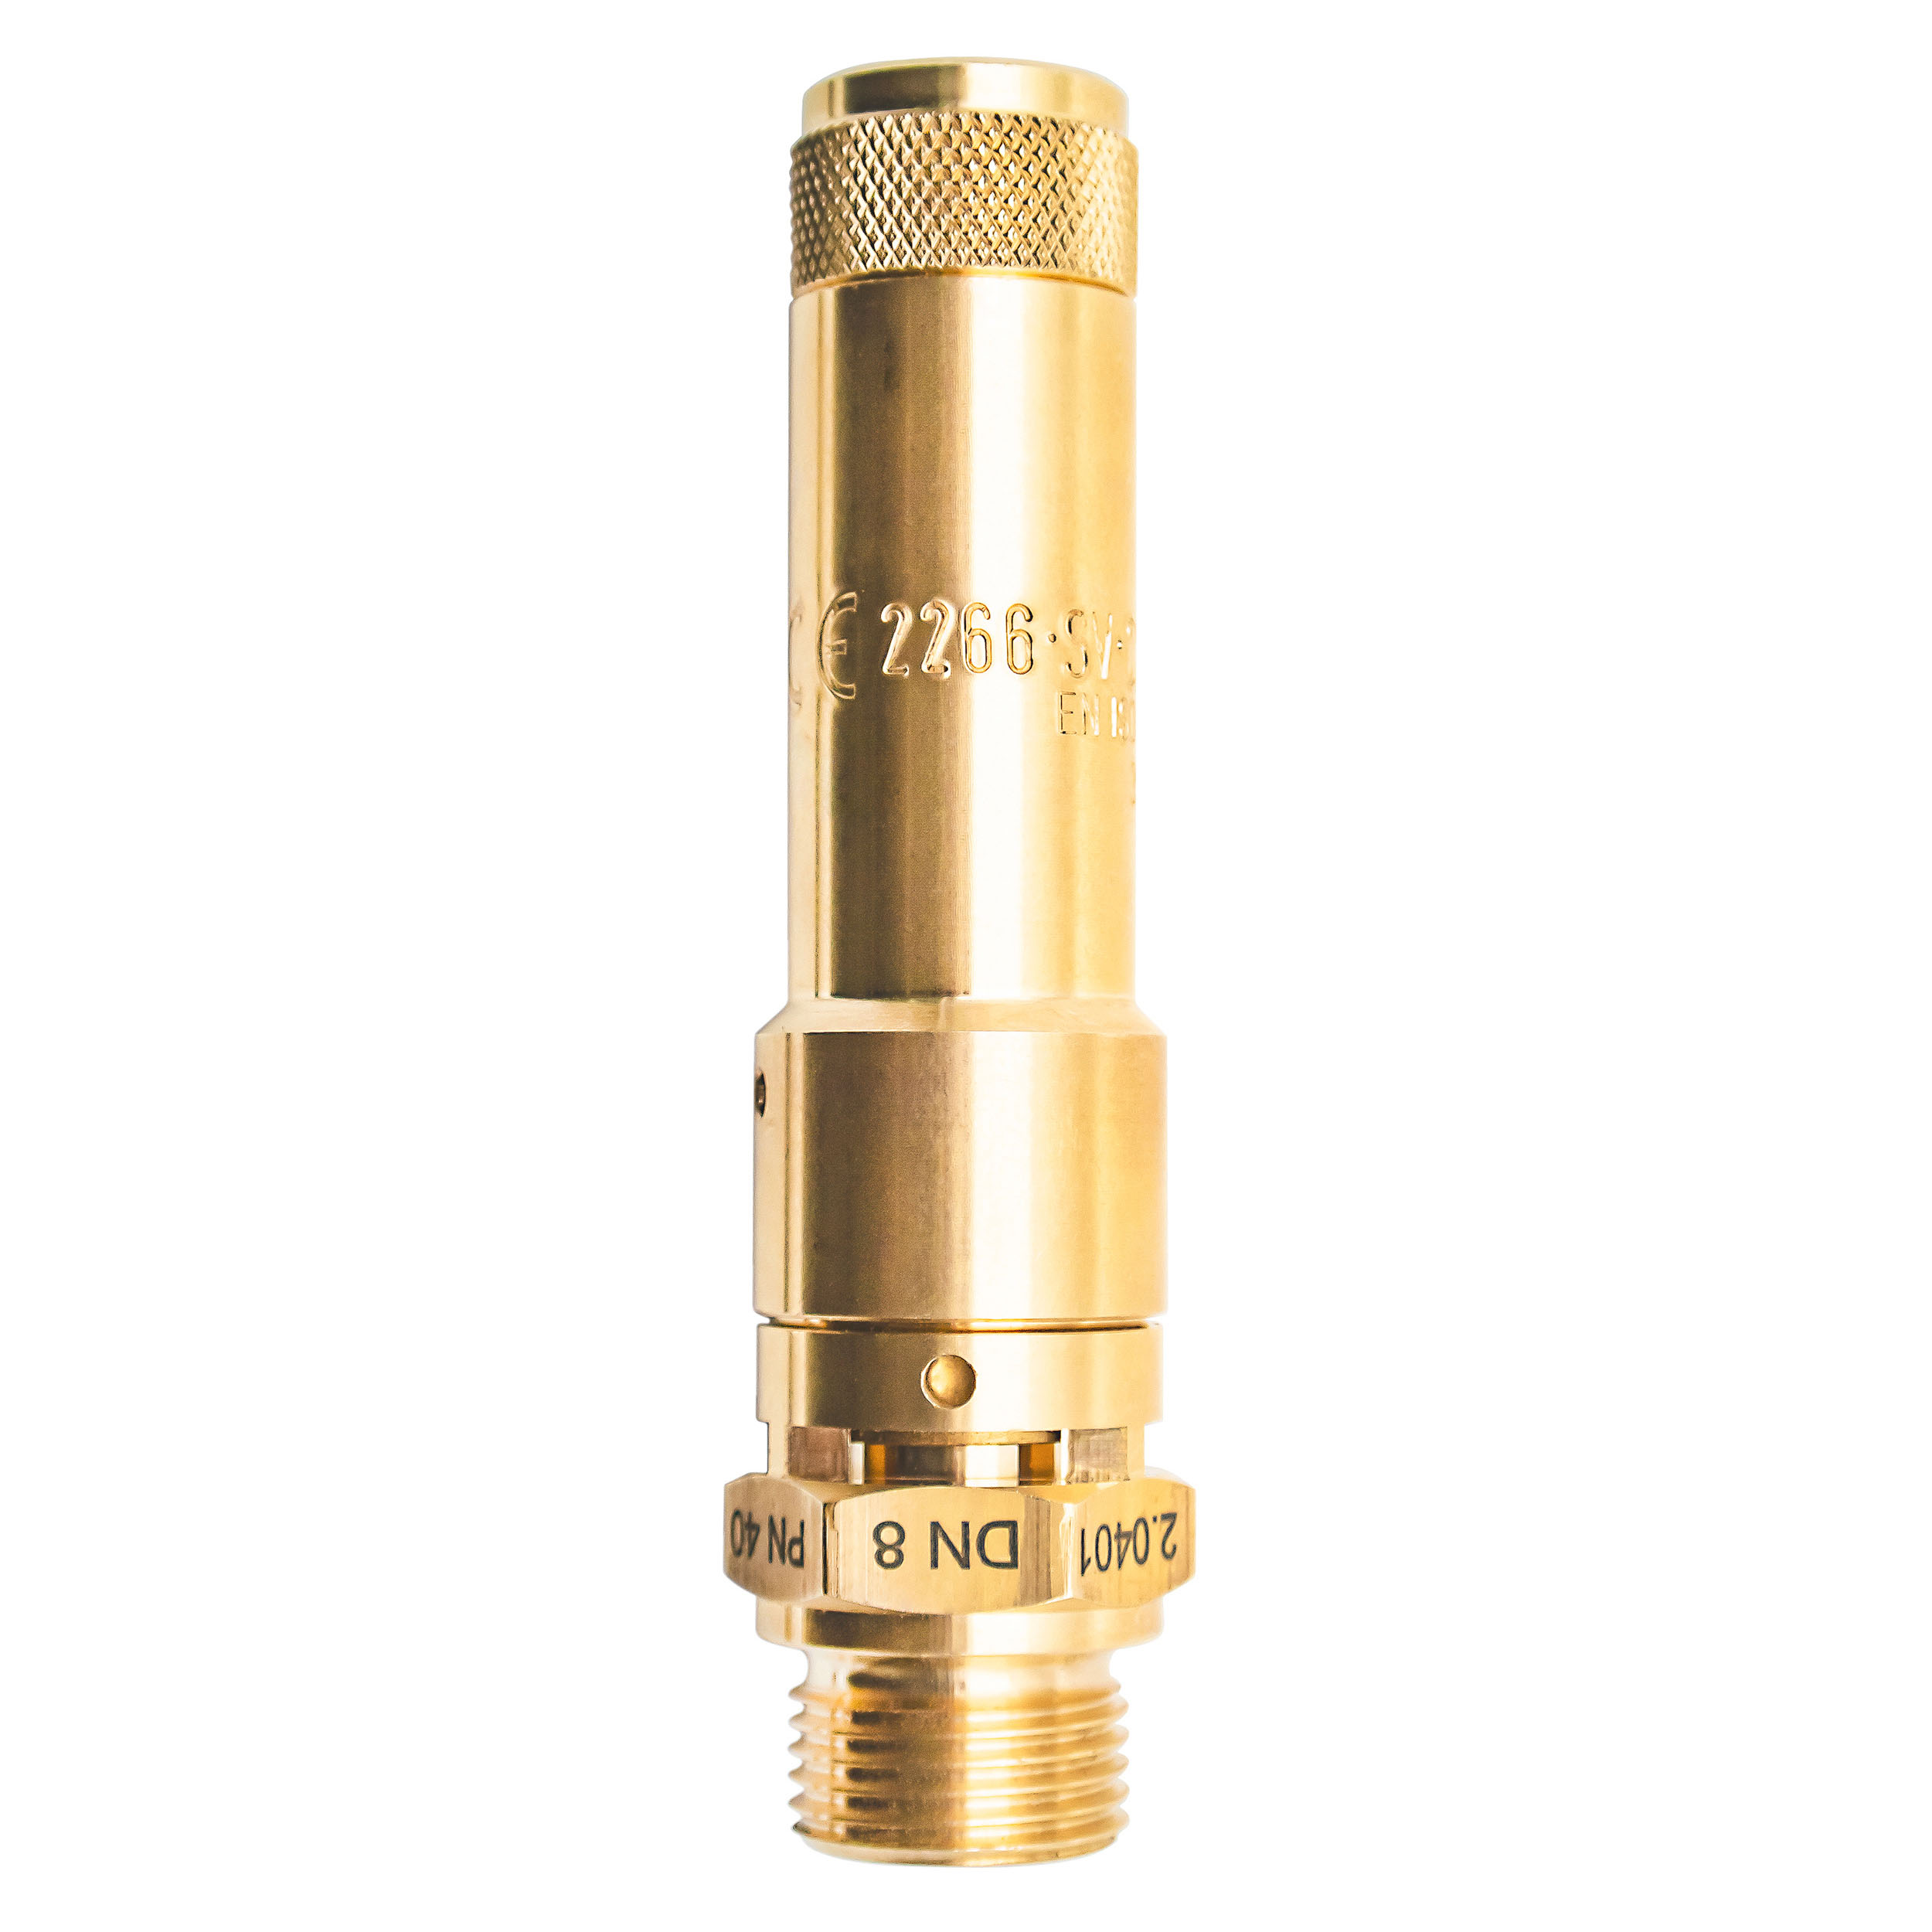 Savety valve component tested DN 8, G½, set pressure: 8.3 bar (120,35 psi)